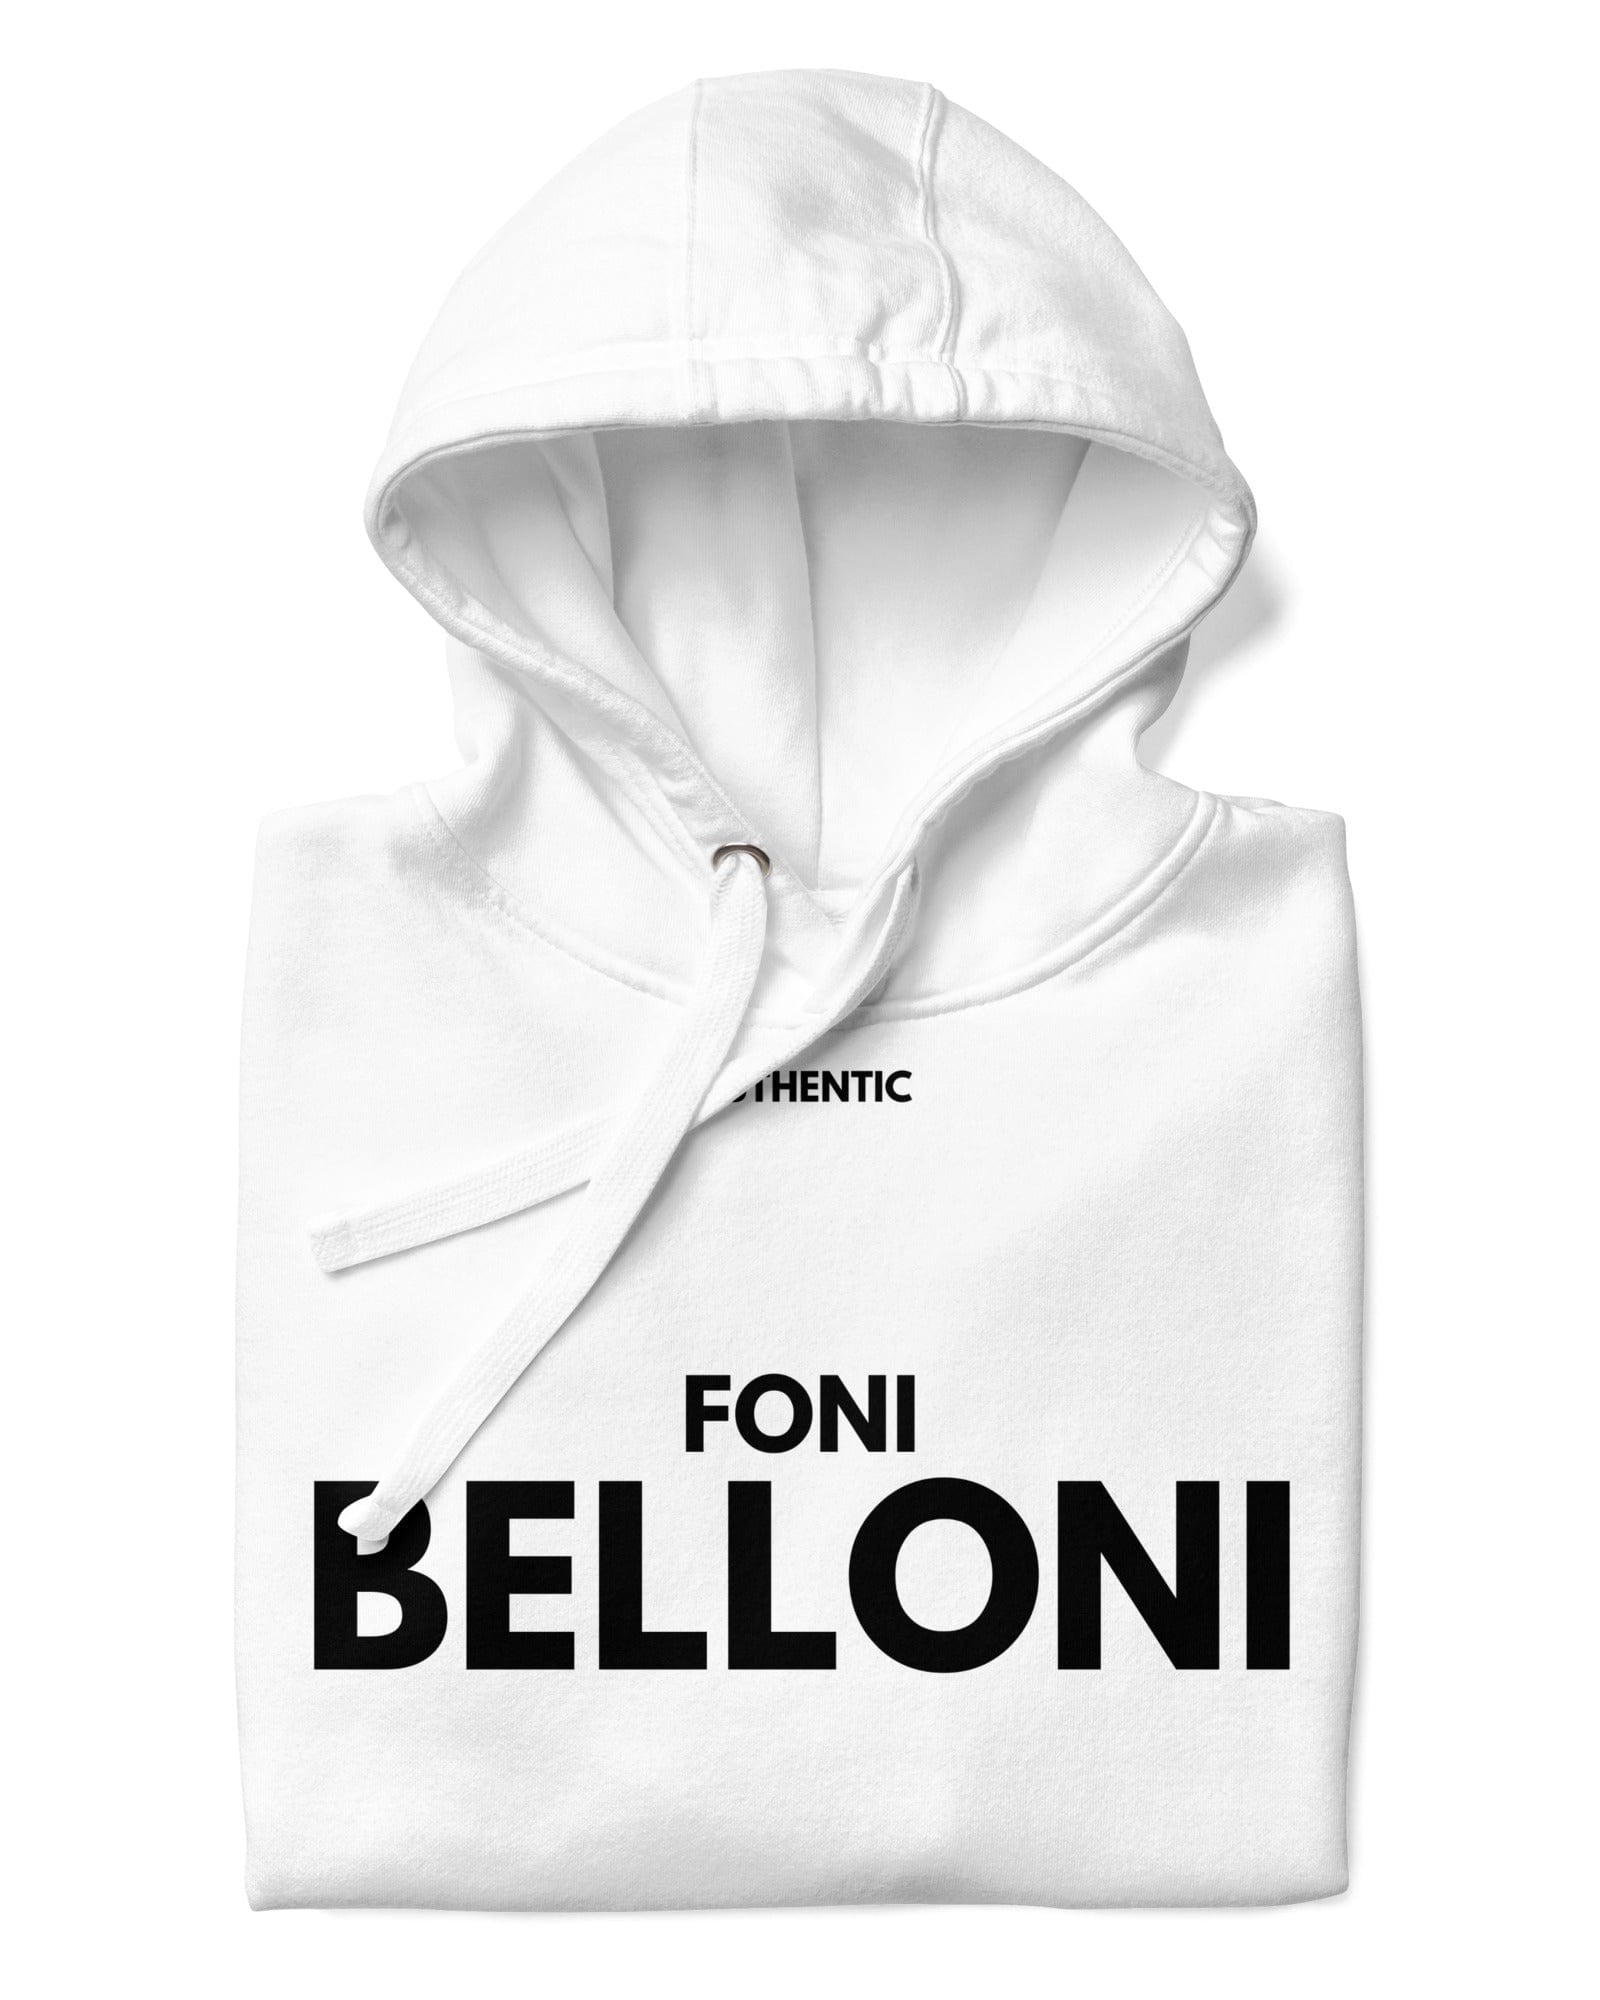 Foni Belloni Authentic Fashion Hoodie | Unisex Hoodies Jolly & Goode